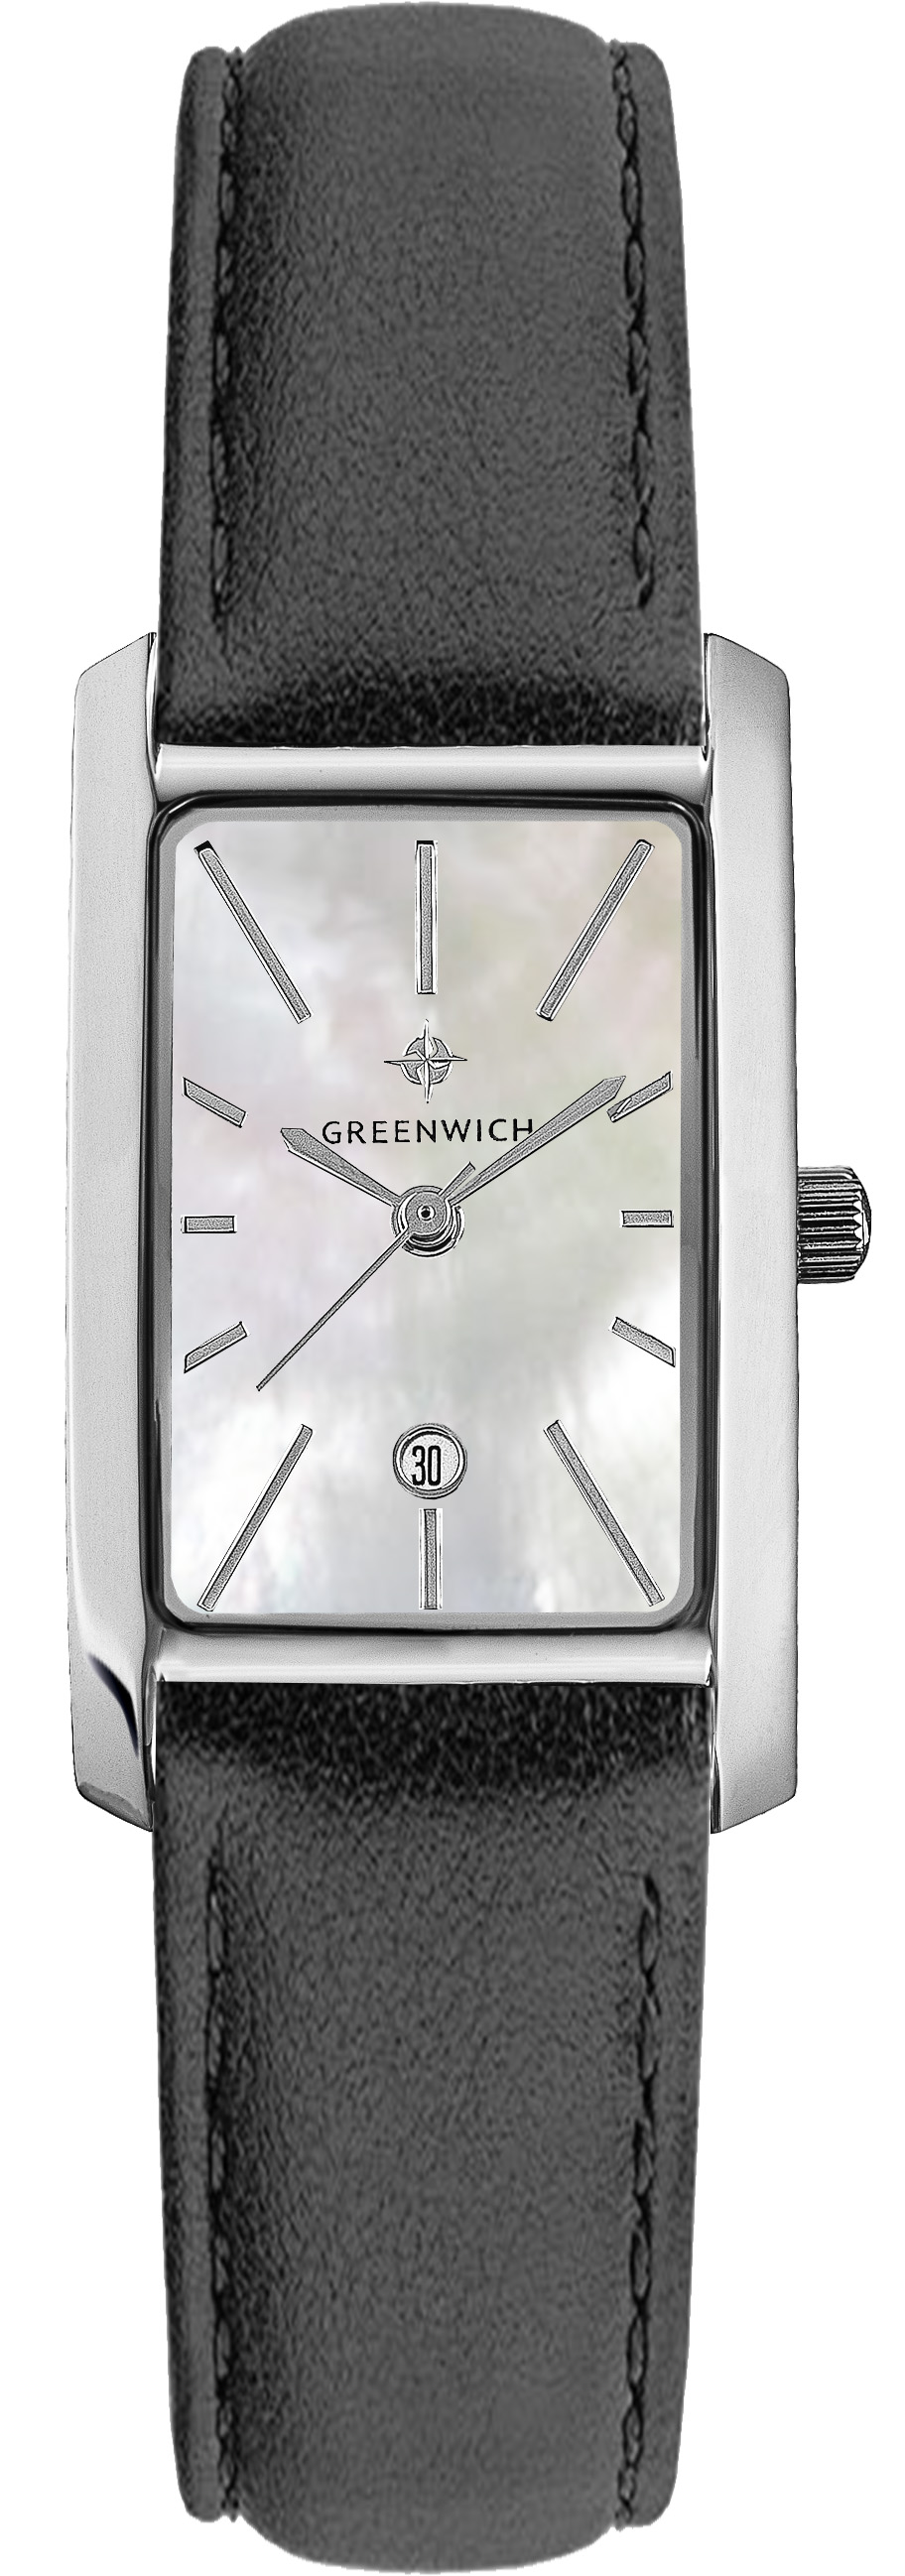 Наручные часы мужские Greenwich GW 501.11.13